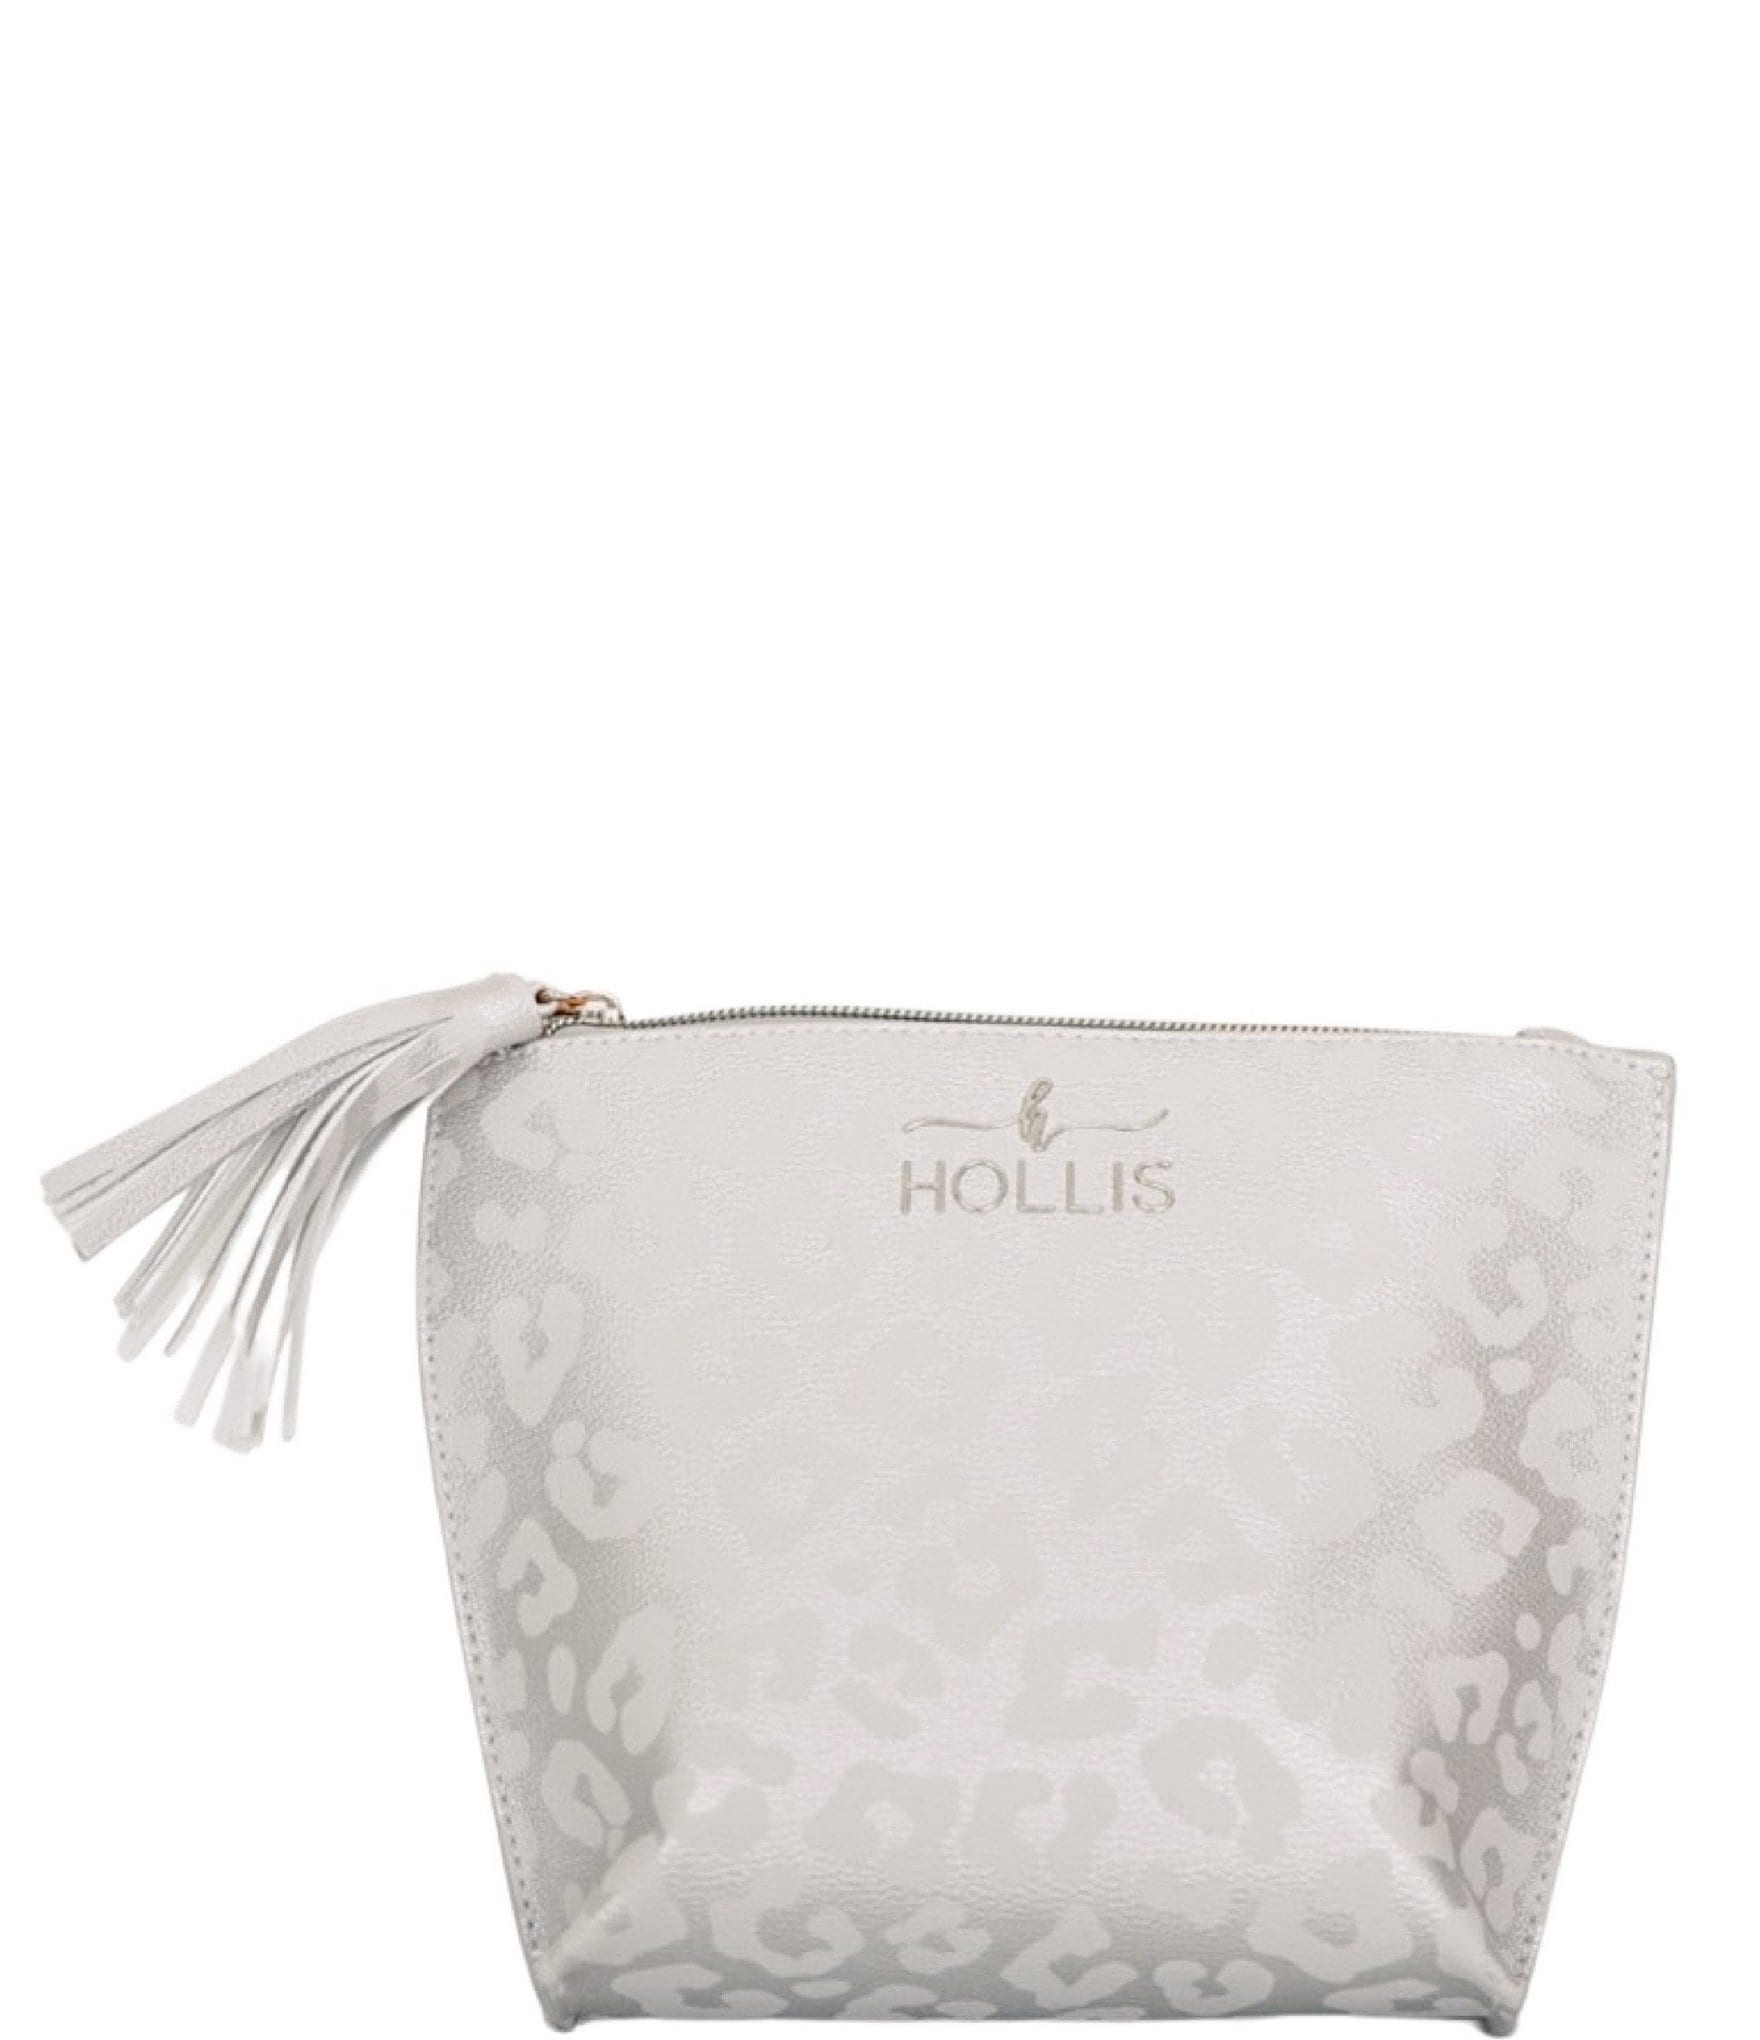 Hollis x Dillard's Champagne Leopard Vegan Leather Holy Chic Bag - Champagne Leopard